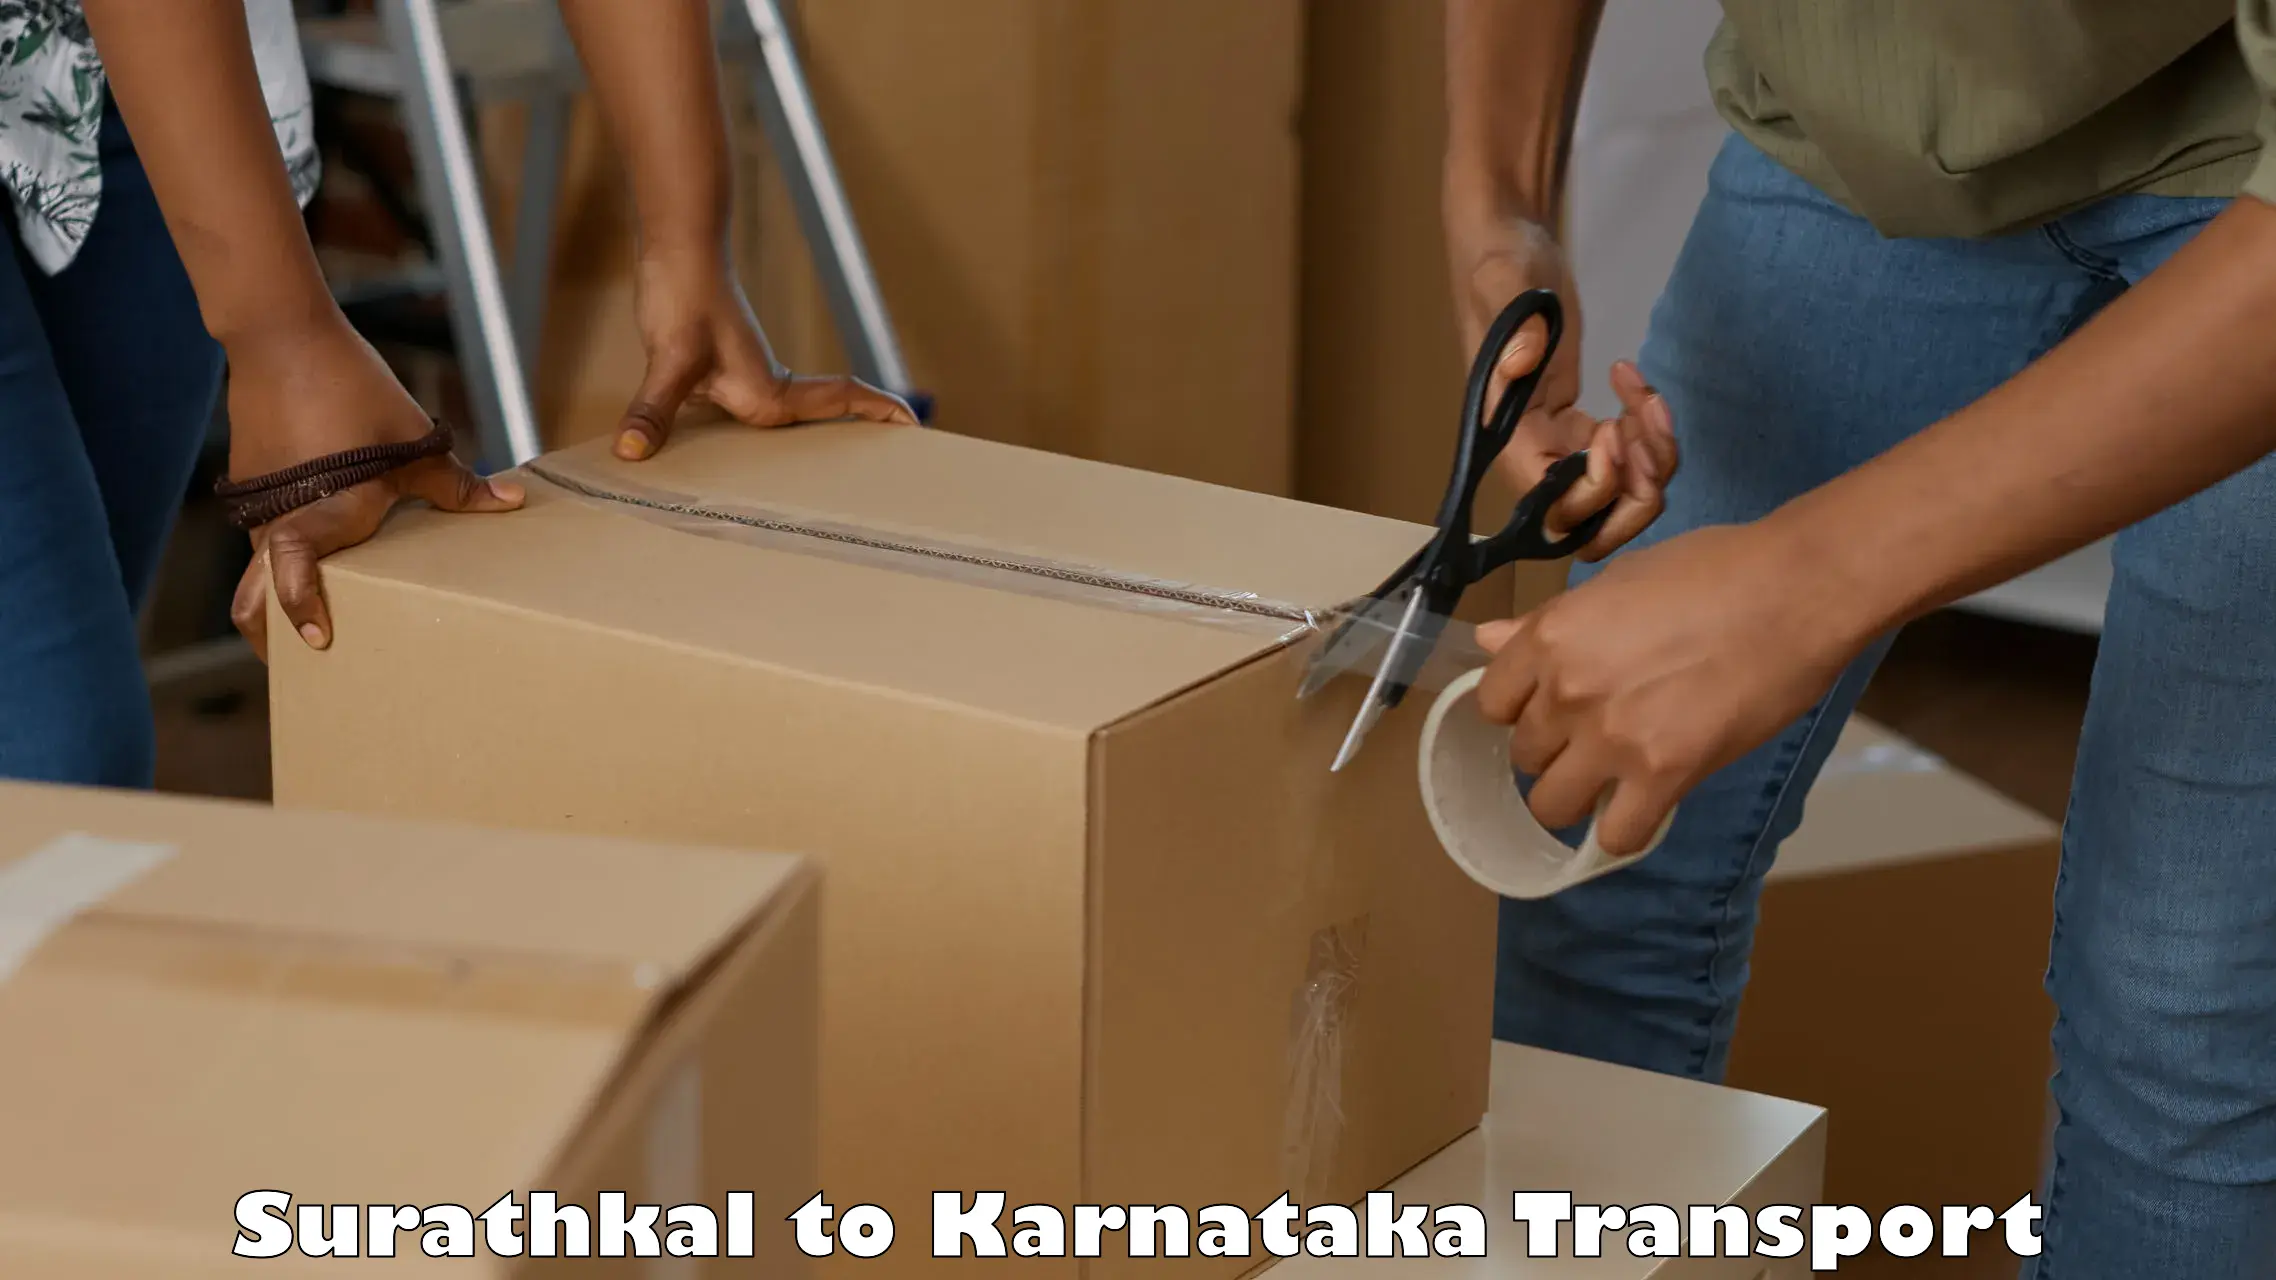 Furniture transport service Surathkal to Yellapur